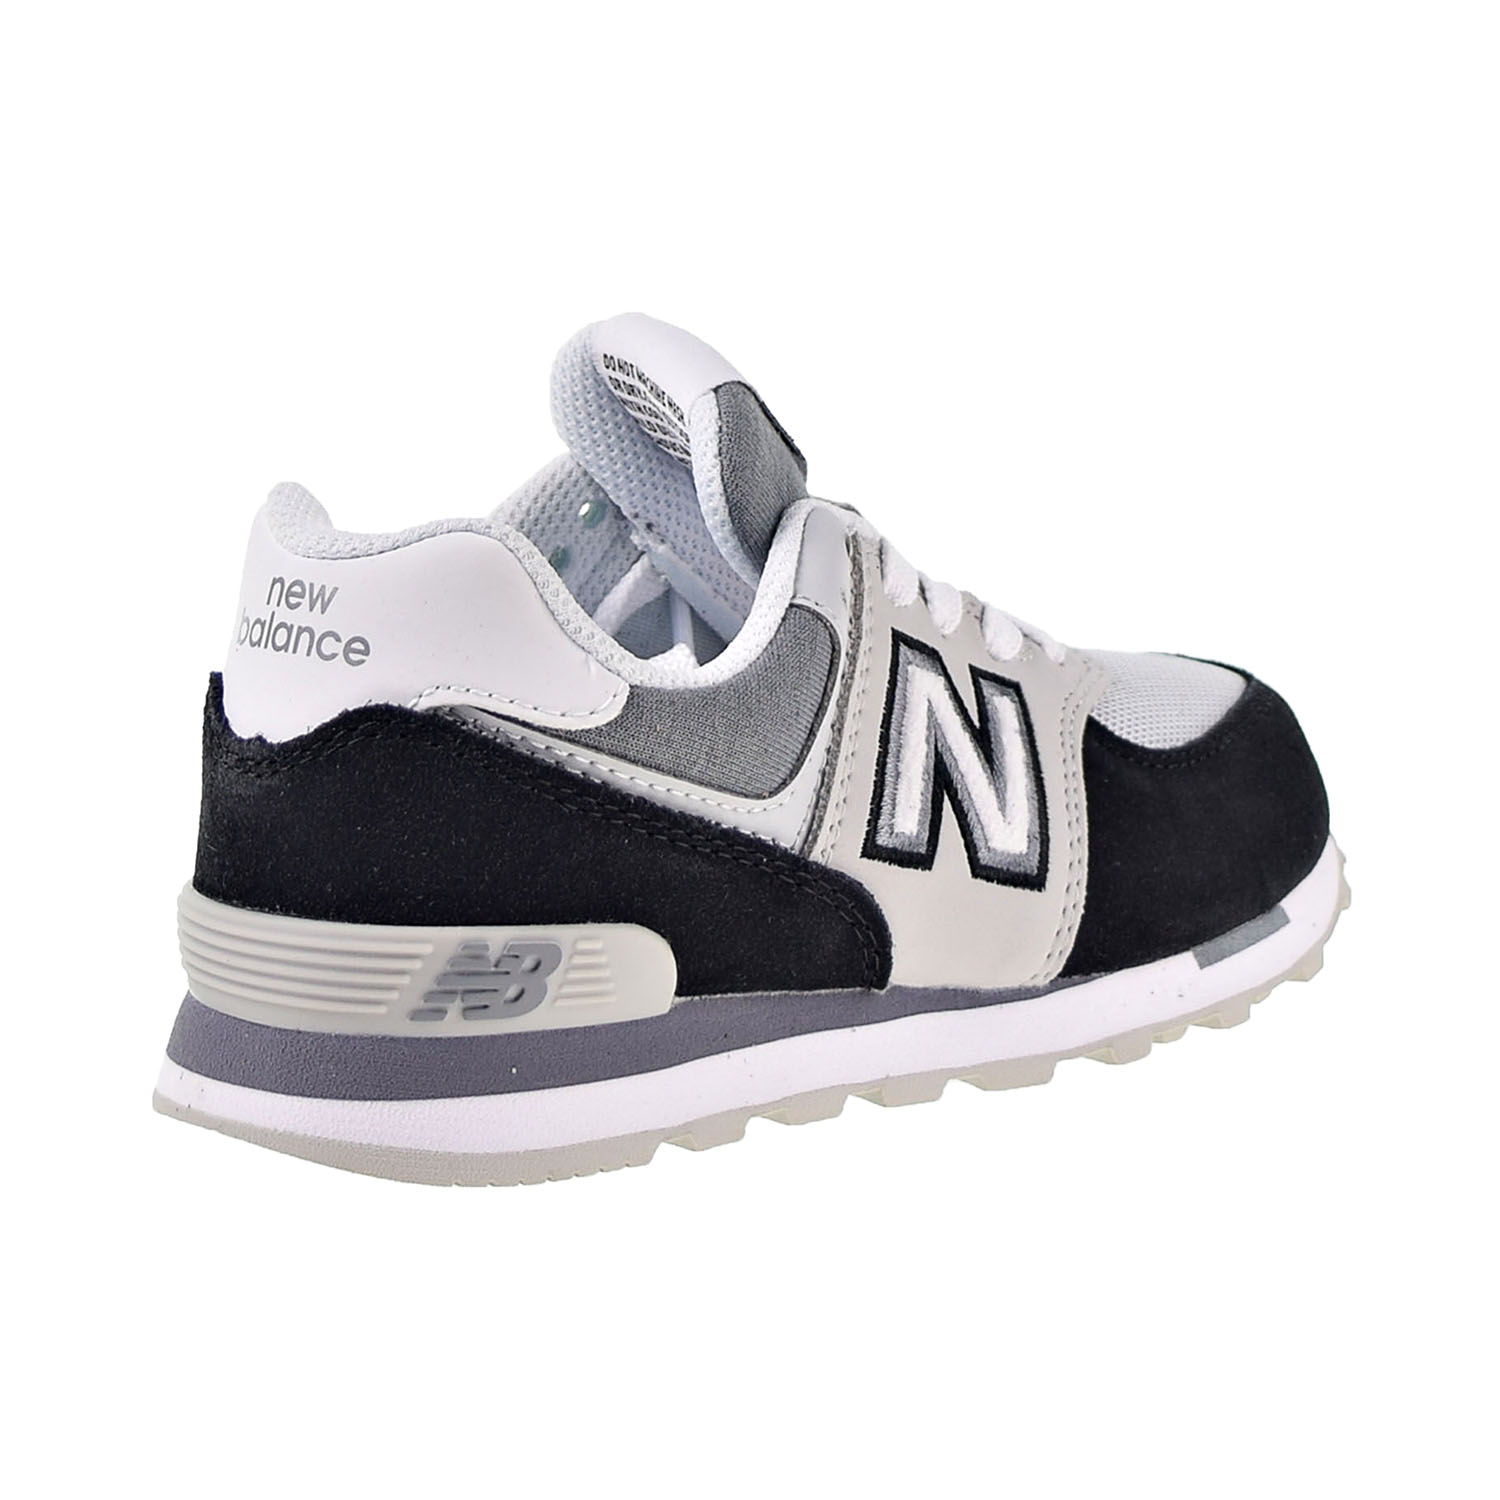 New Balance 574 Varsity Sport Little Kids Shoes Gray-Black-White pc574-nlc - image 3 of 6